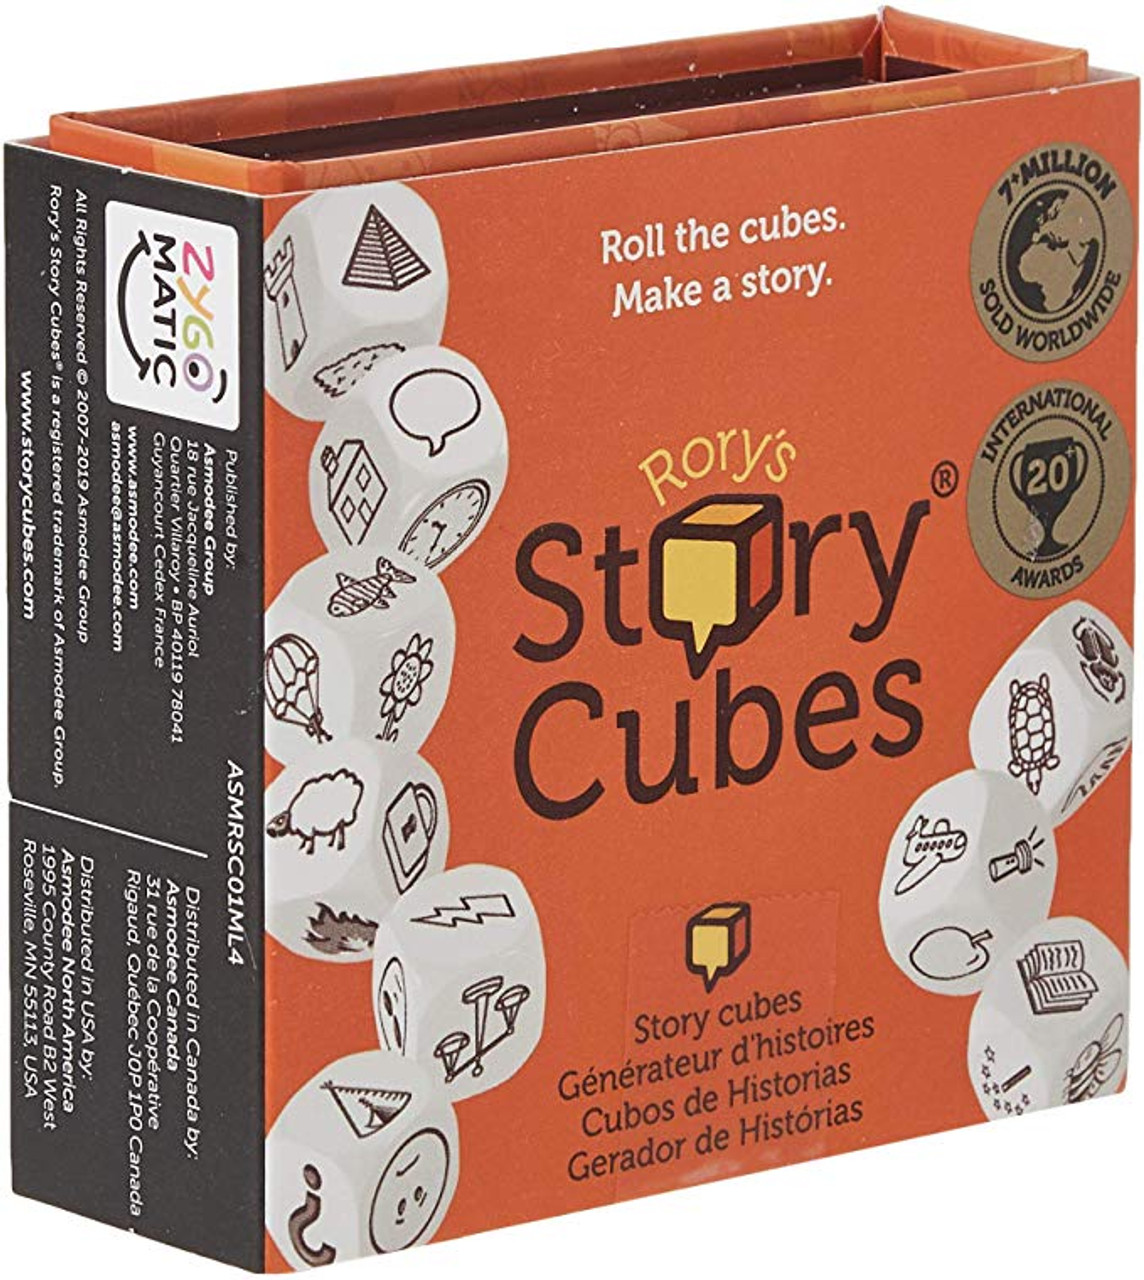 Rorys story cubes originals - Toysntech